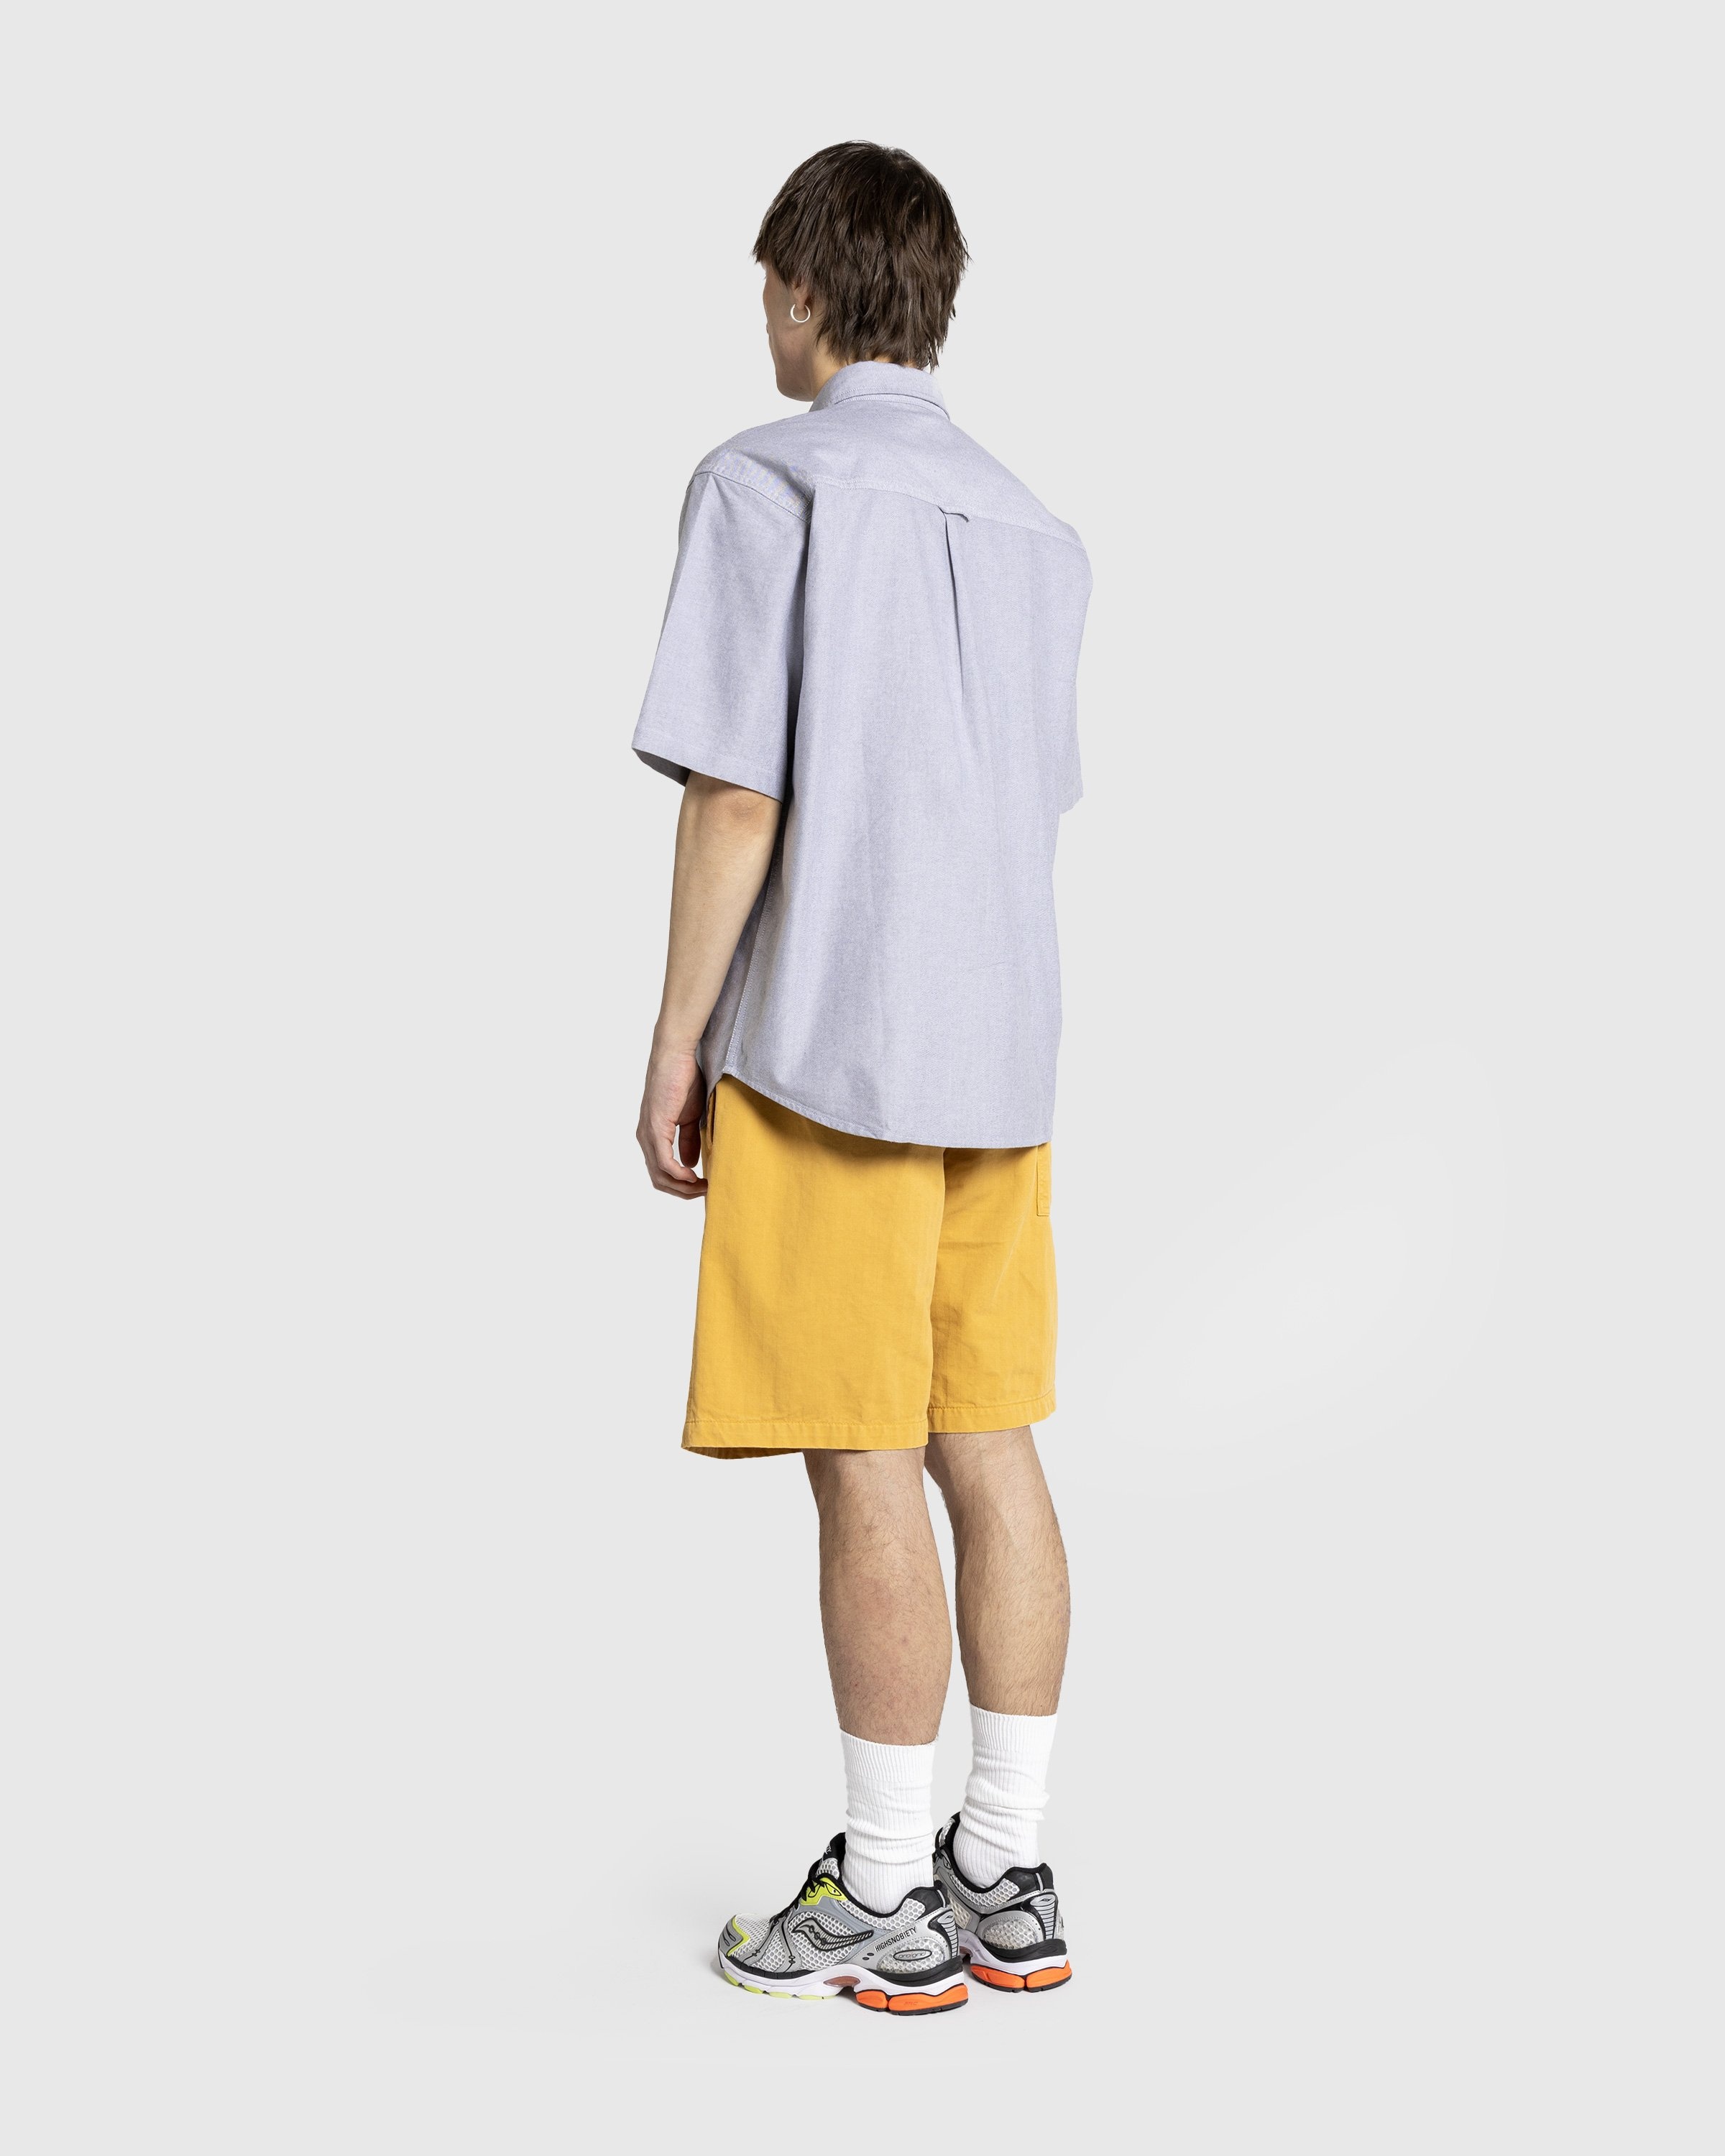 Carhartt WIP – S/S Braxton Shirt Charcoal/Wax - 4